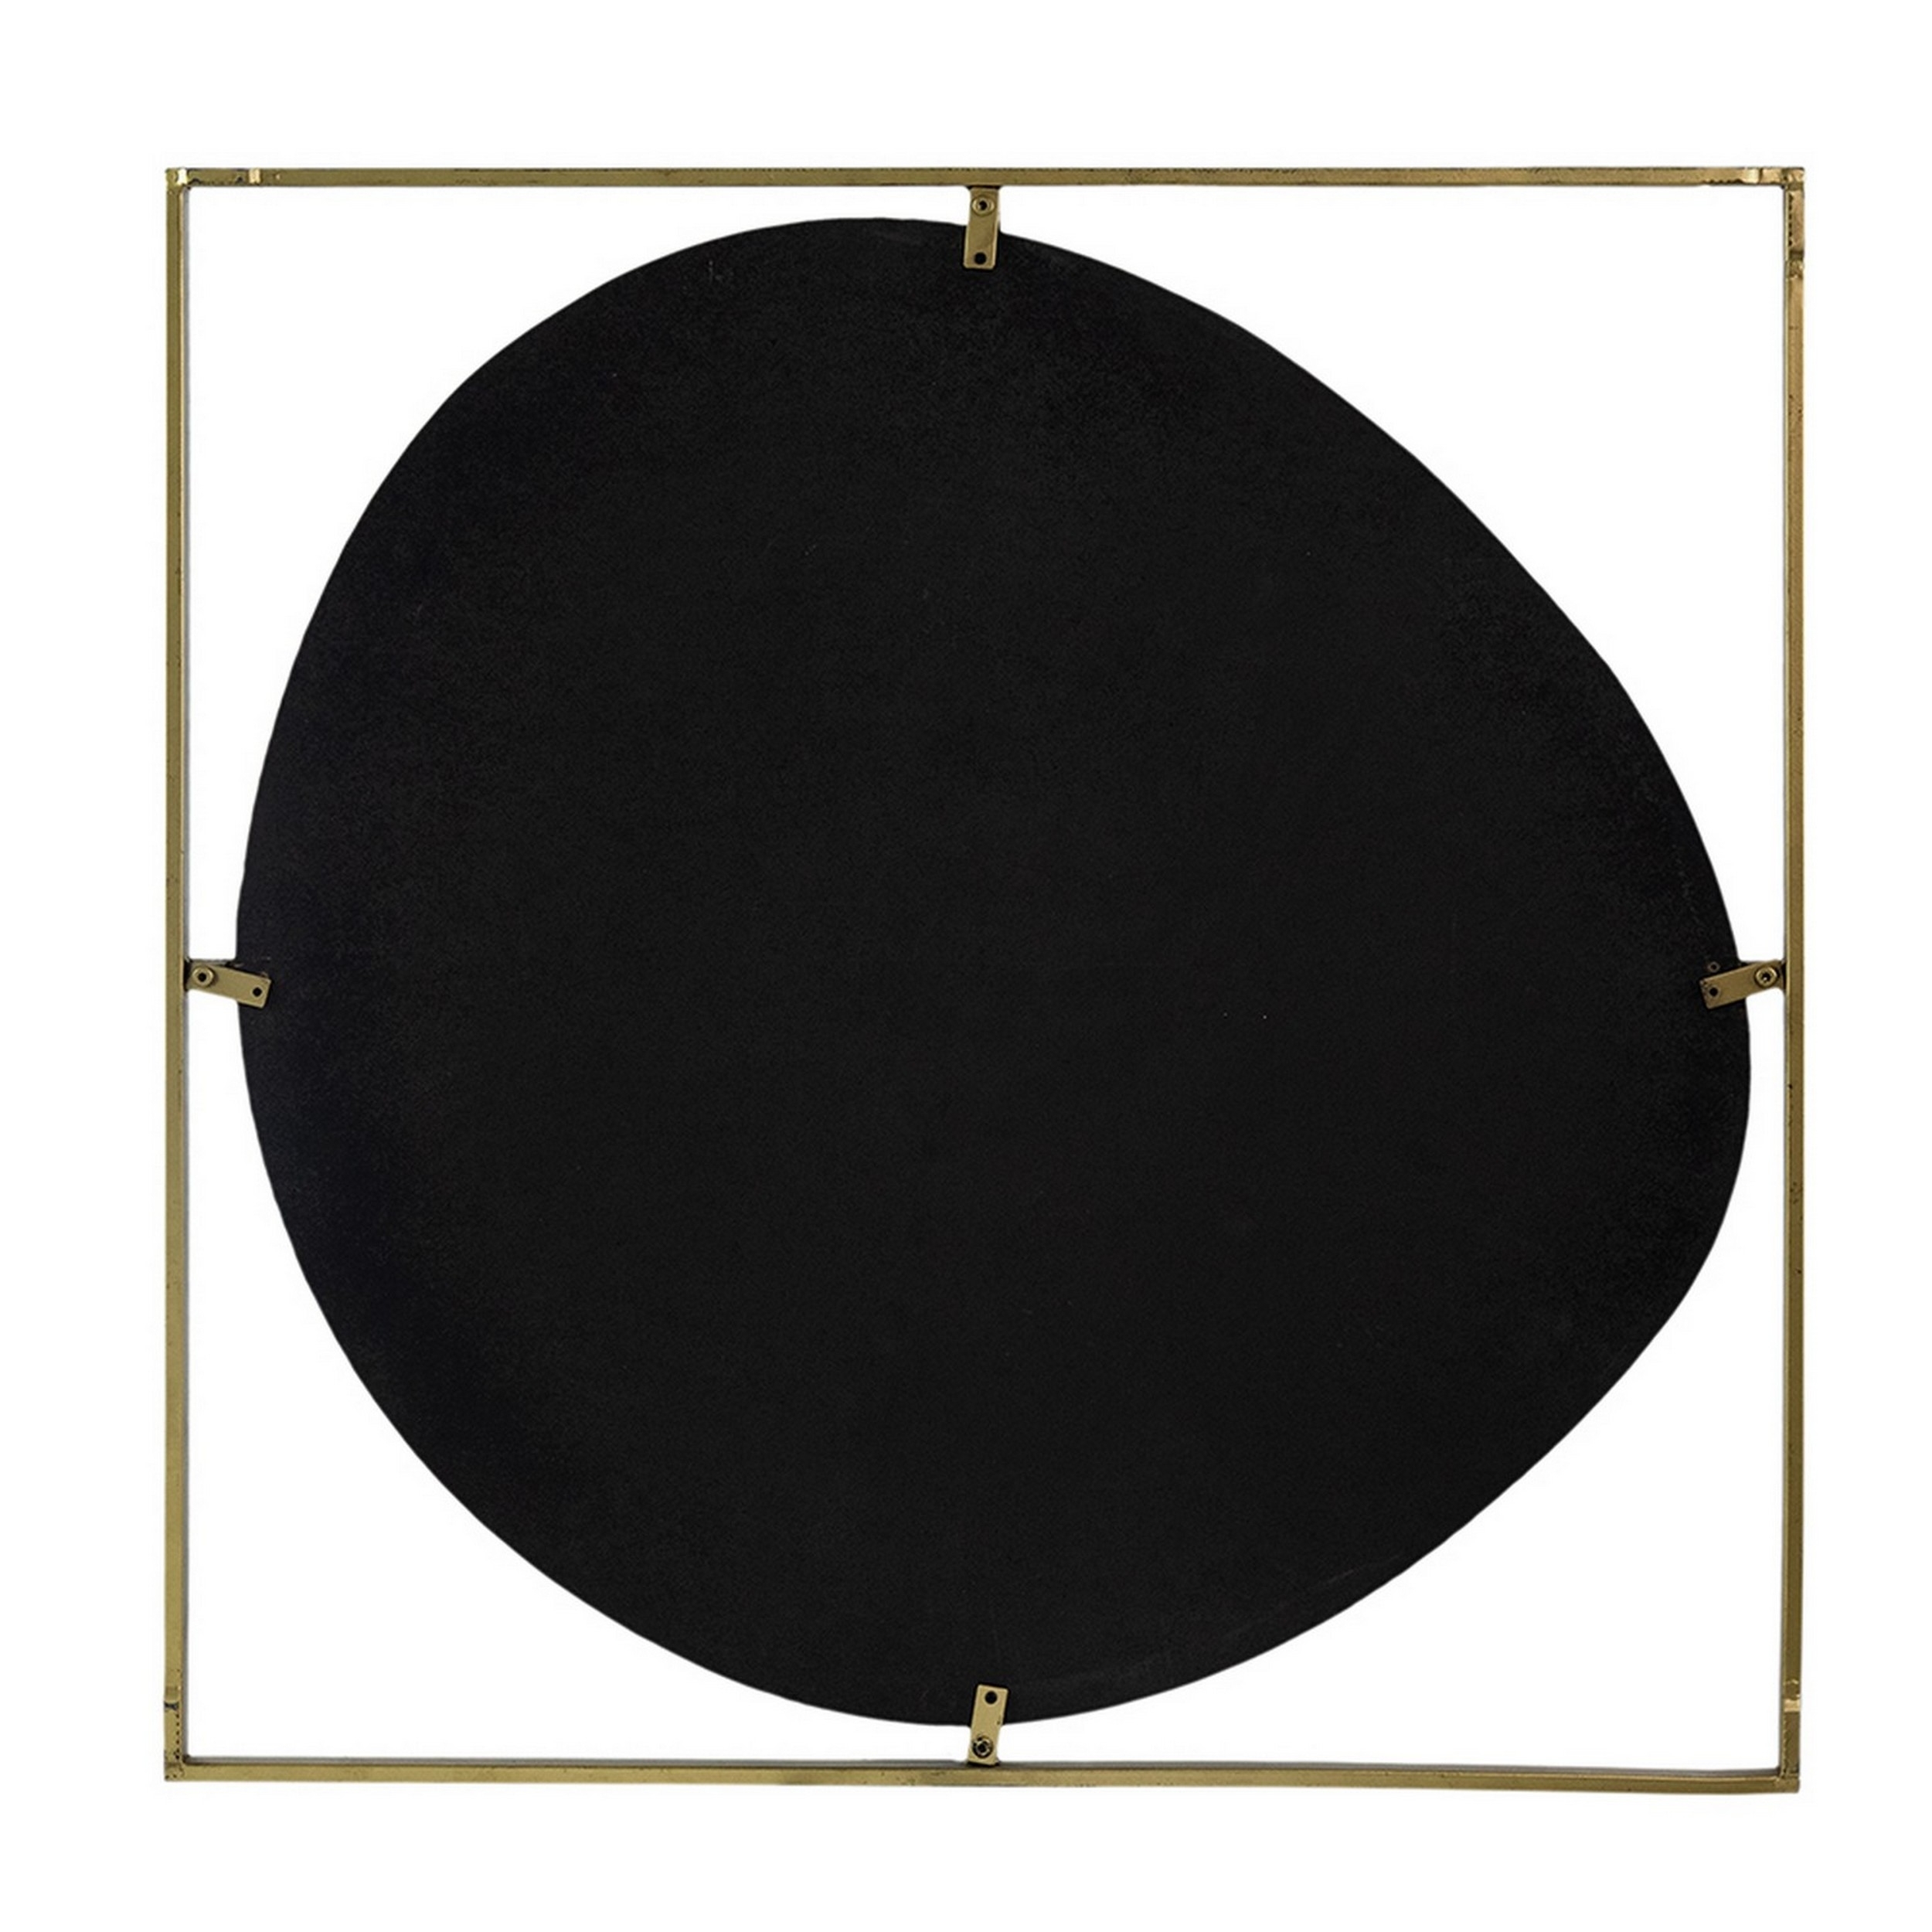 Ani 32 Inch Mirror, Artistic Oval Cut Out Design, Gold Finish Metal Frame- Saltoro Sherpi